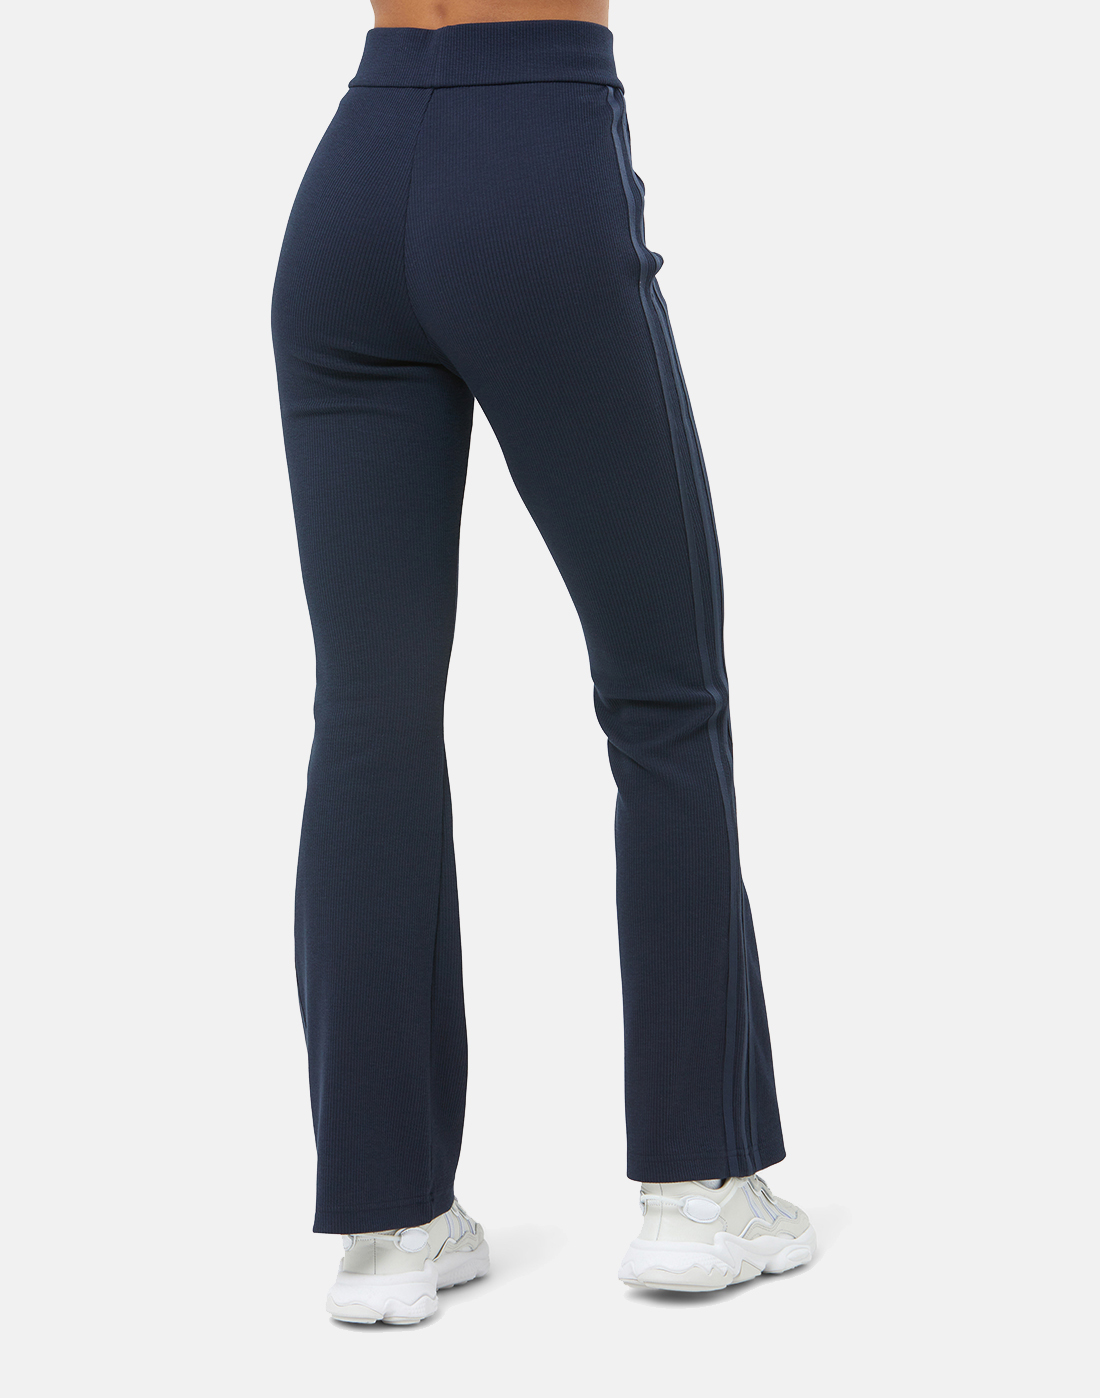 adidas Originals Womens Flare Pants - Navy